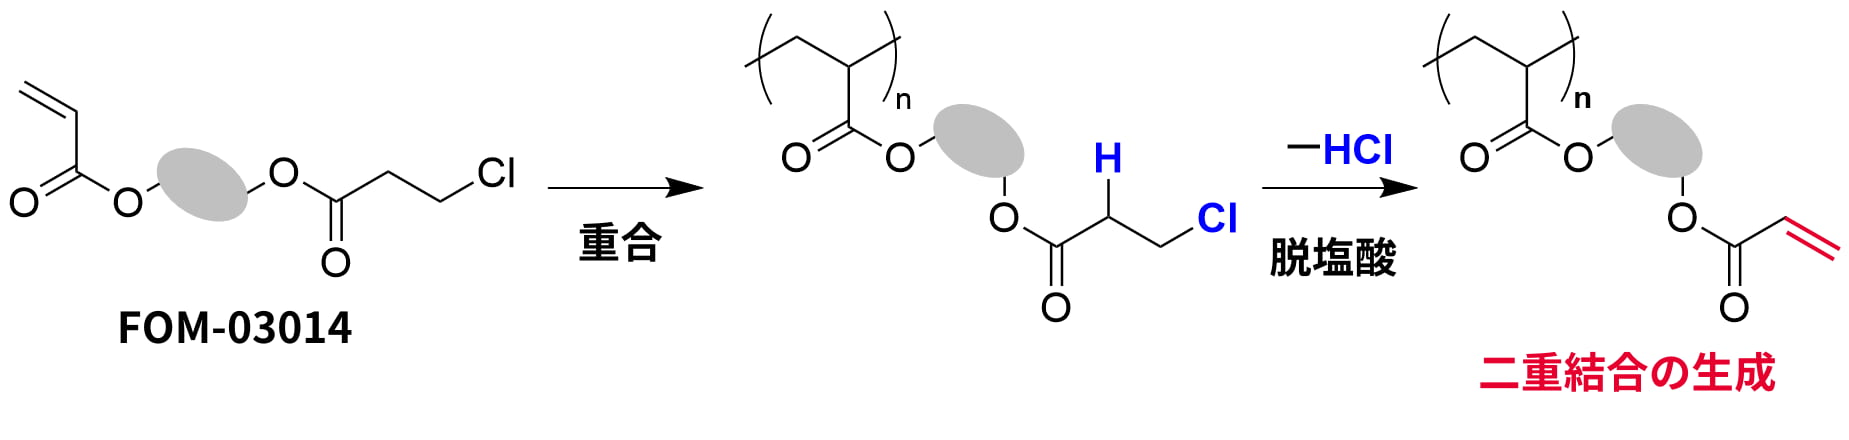 FOM-03014によって二重結合が生成される図